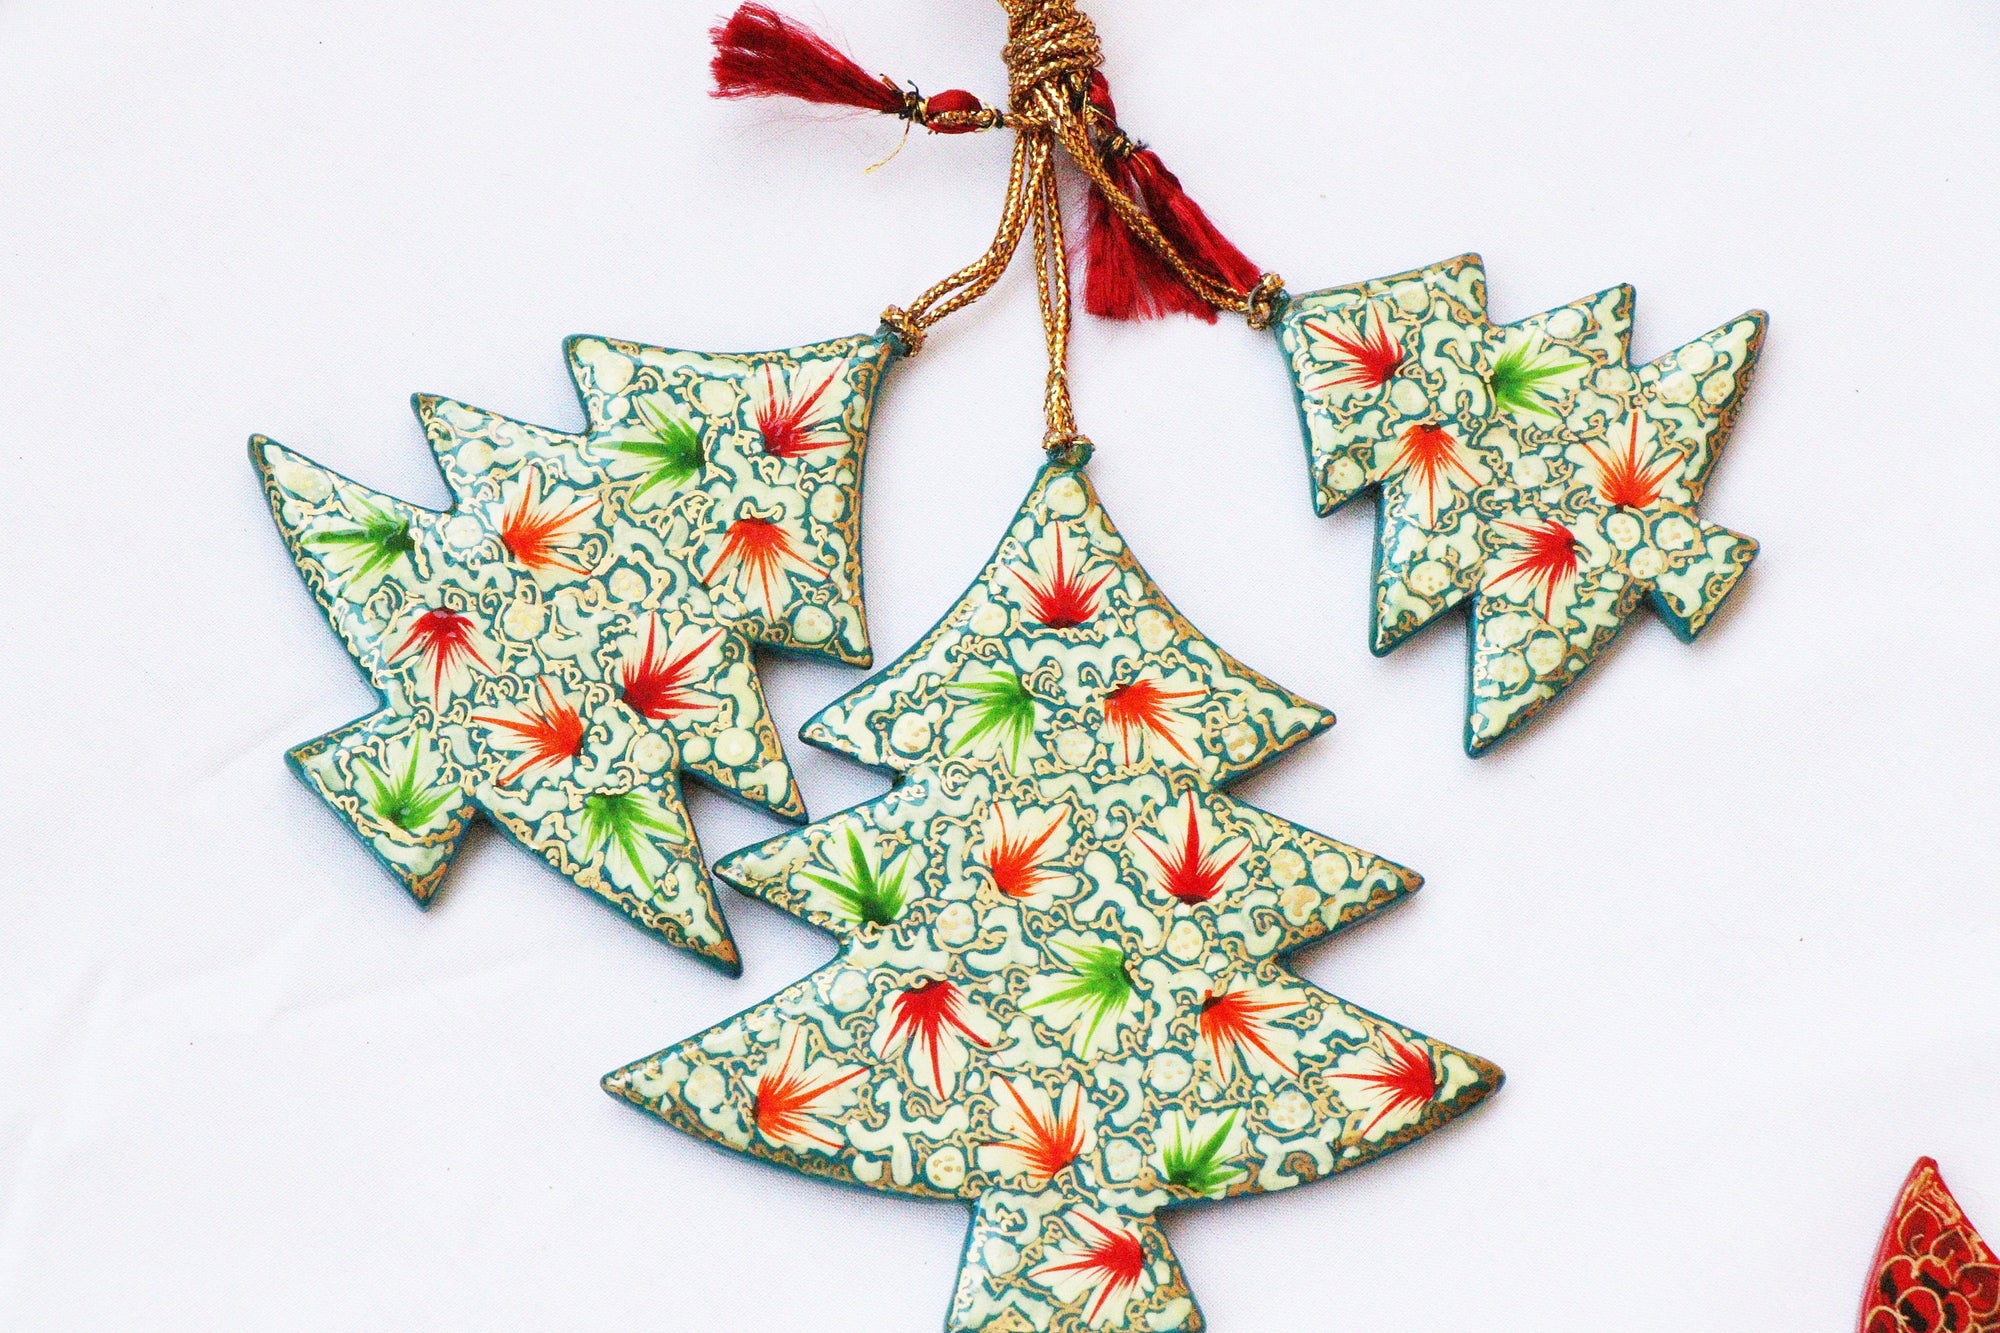 Christmas Tree Set - Christmas Ornaments, Christmas Baubles, Hanging Ornaments, Christmas Decoration, Handmade Paper Mache Christmas Gift